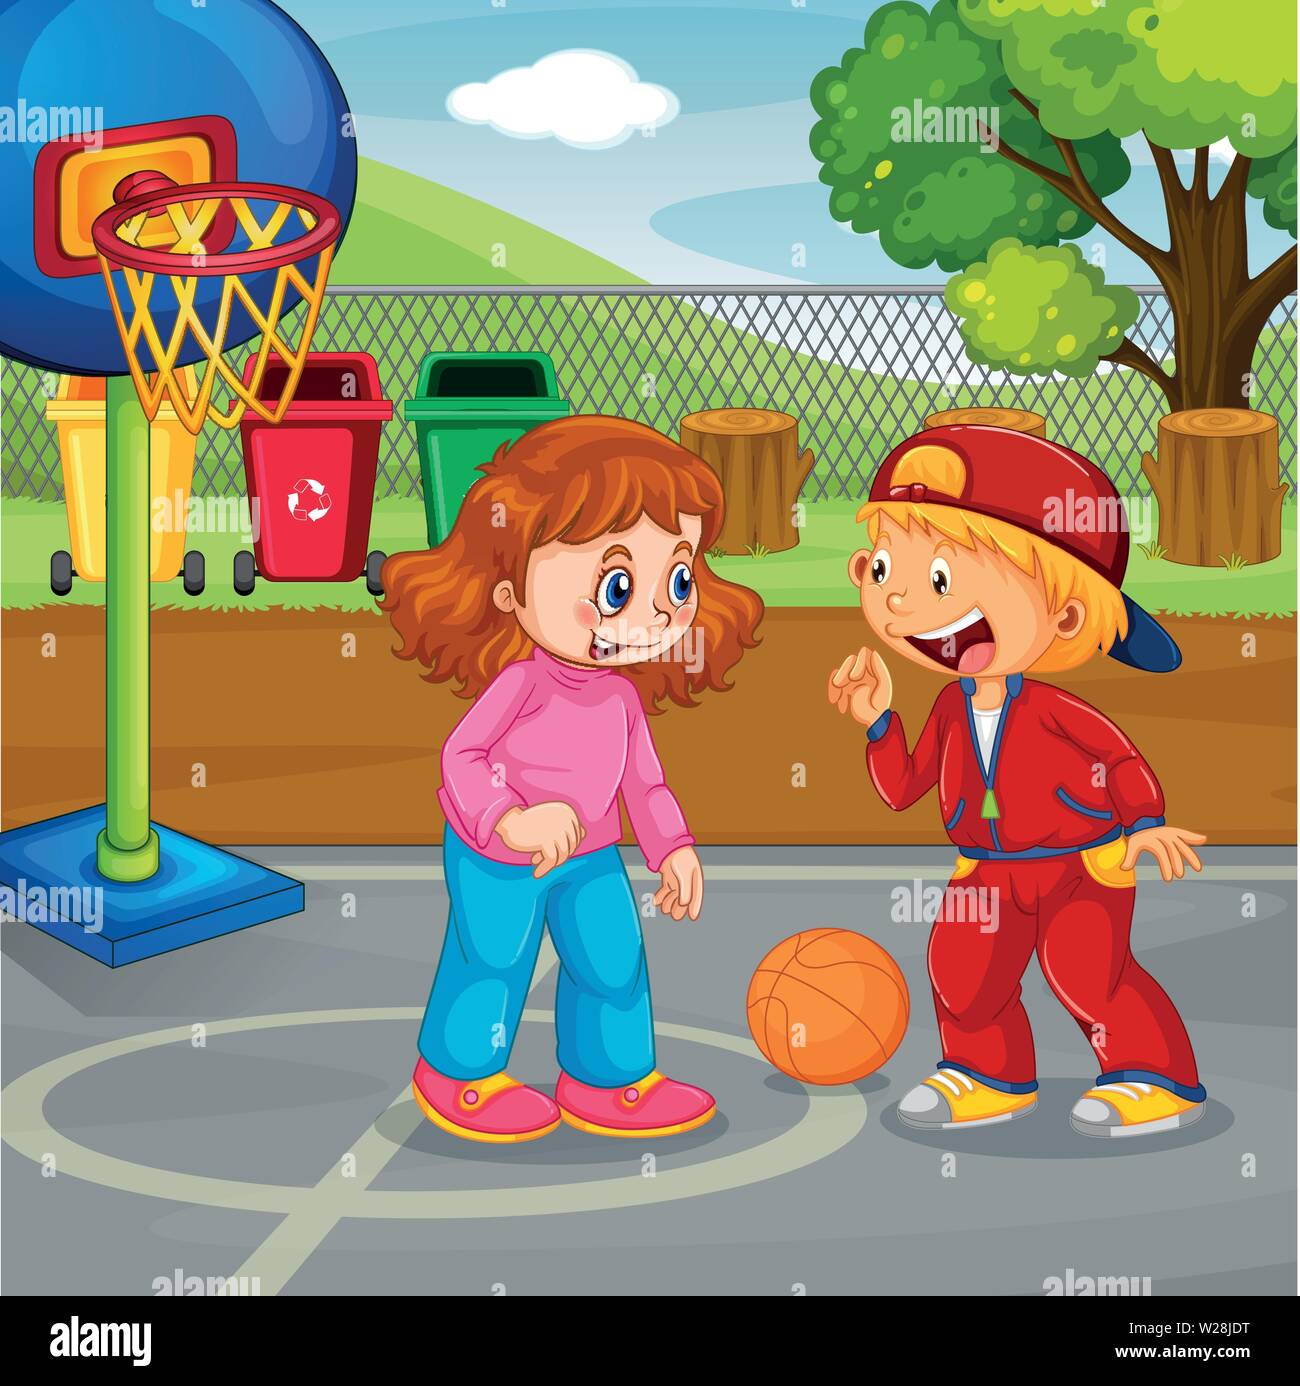 Children basketball at the park illustration Stock Vector